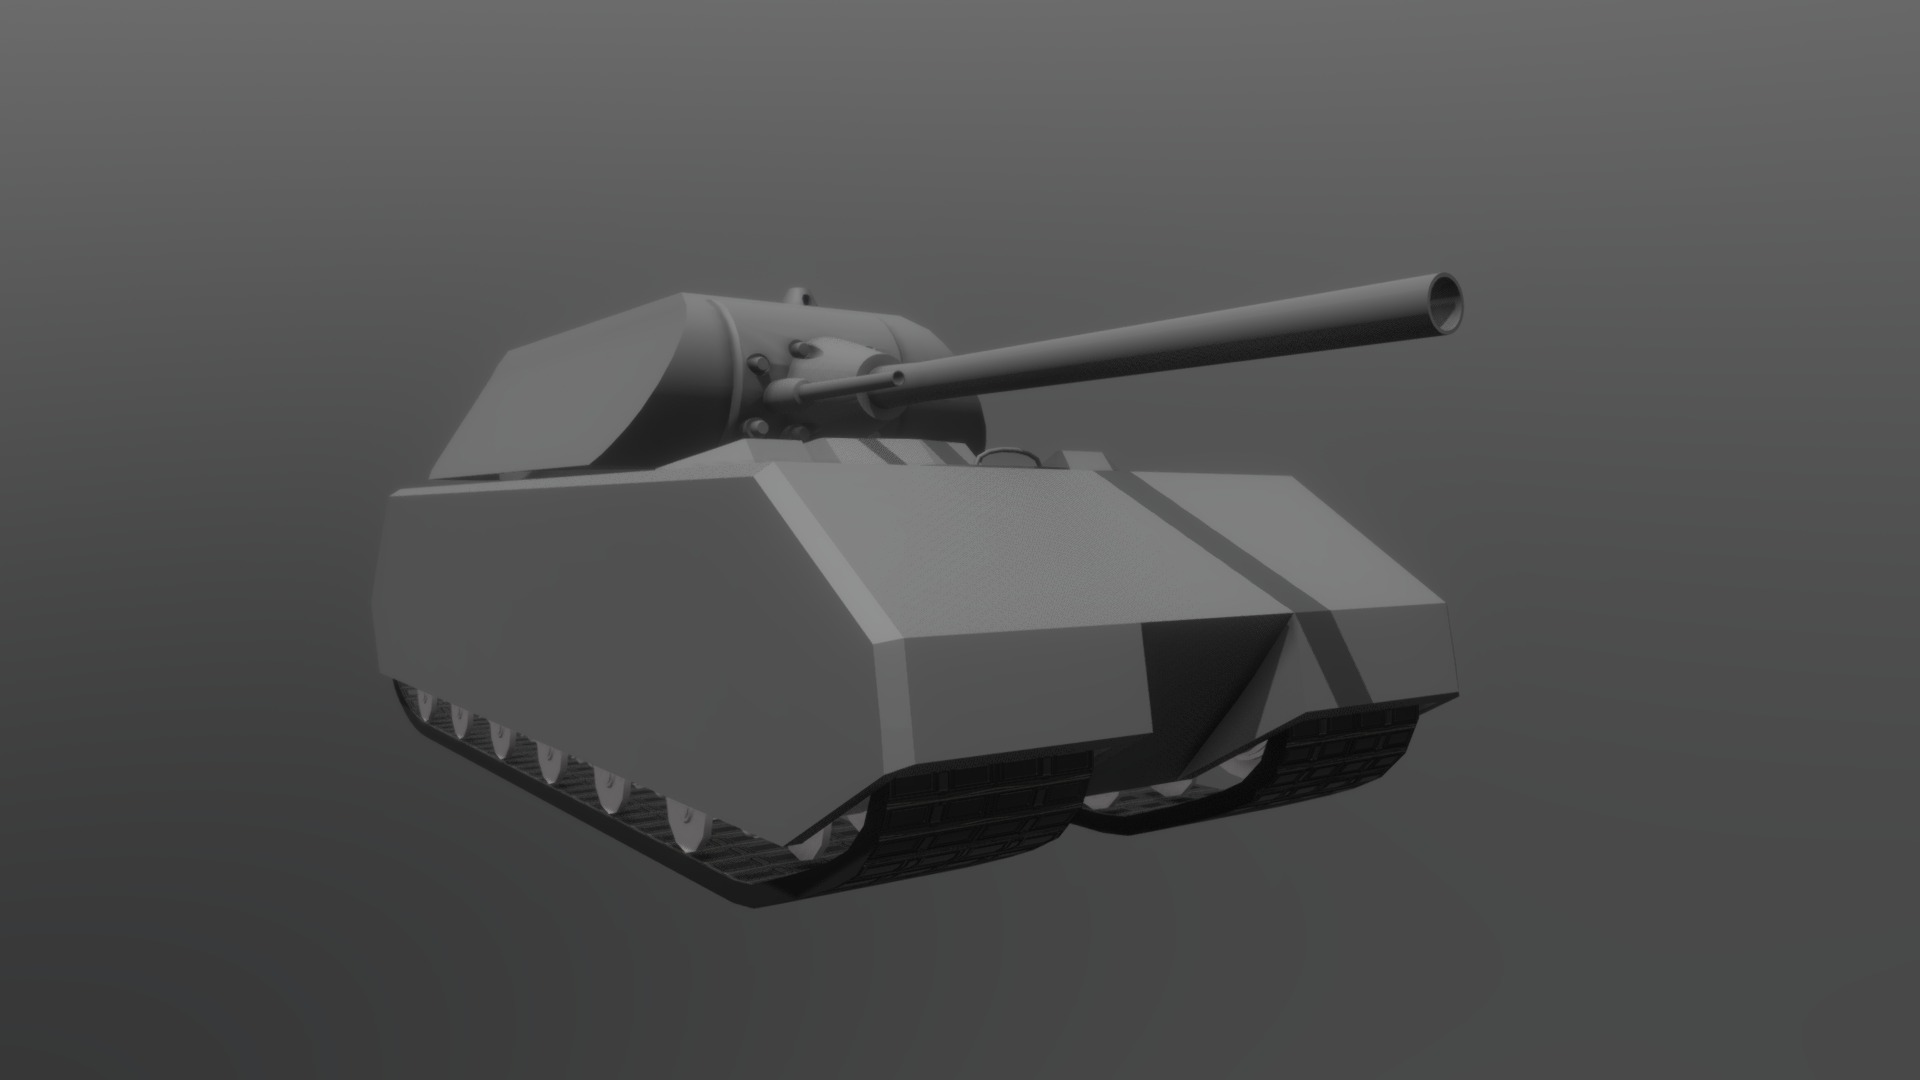 Panzerkampfwagen VIII Maus model by Shiny Spiteful Mk. XIVe [72b9068]